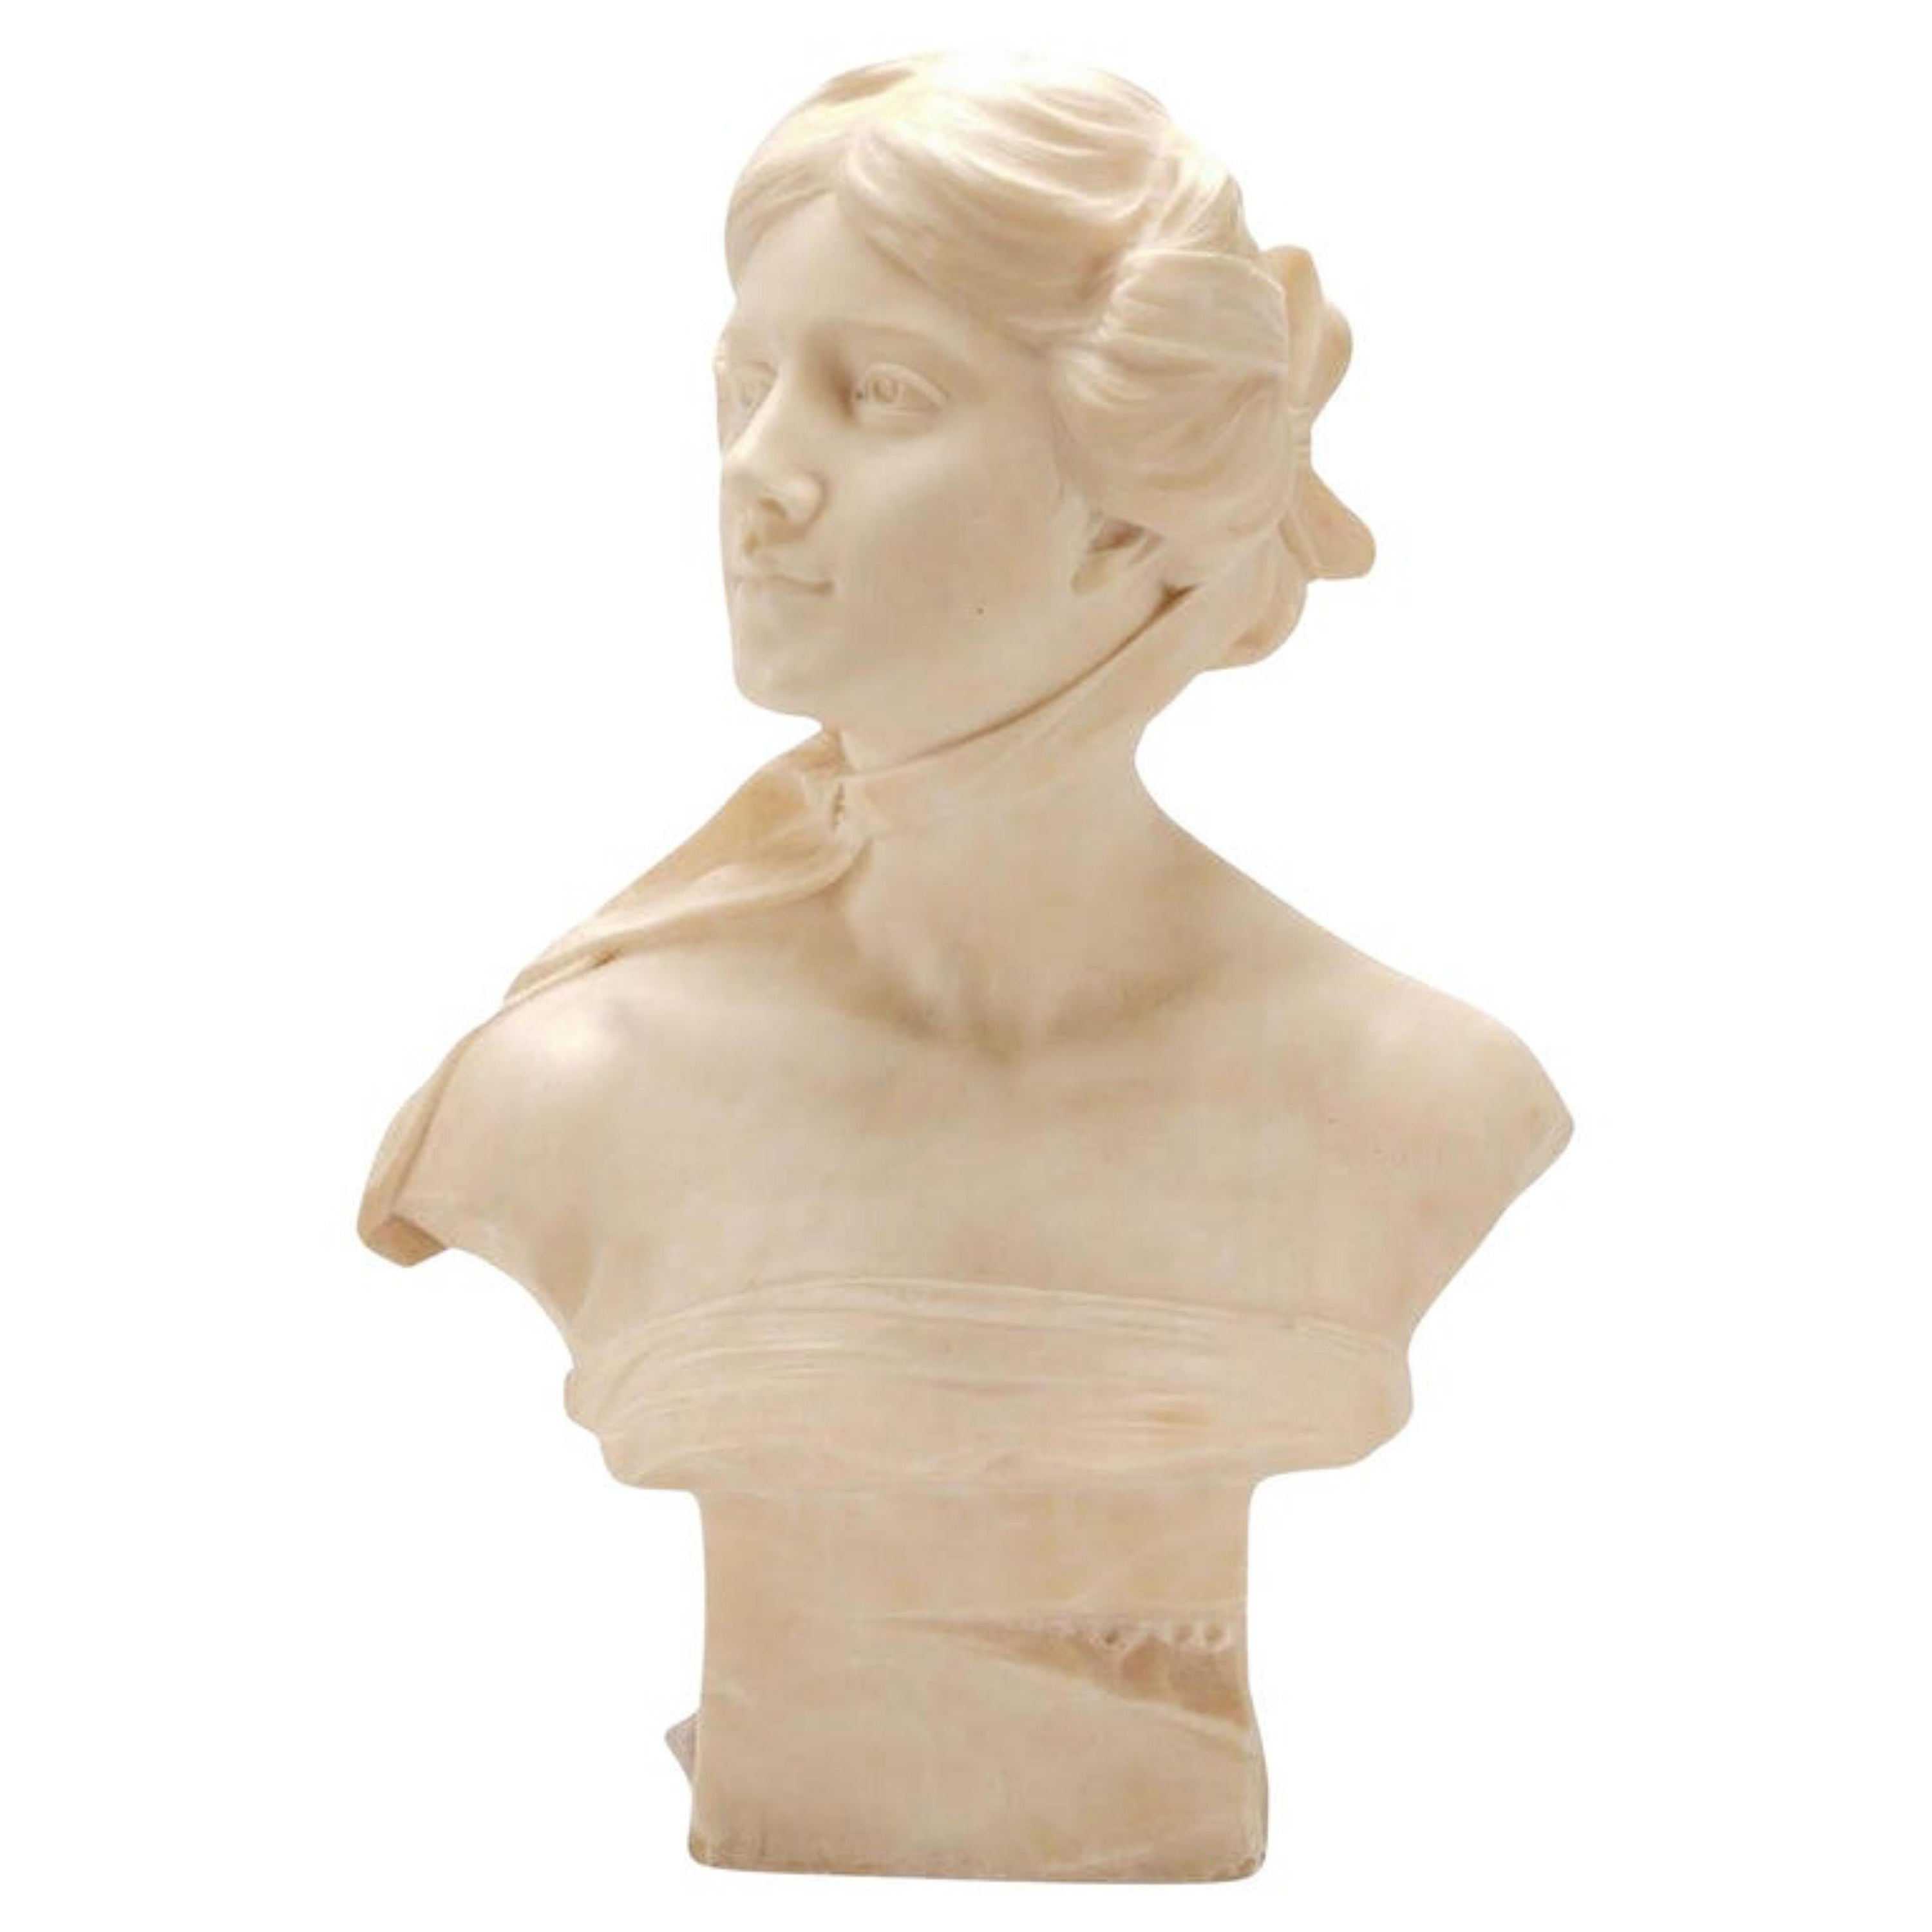 Emilio Fiaschi "The Beautiful Florentine" Marble Bust